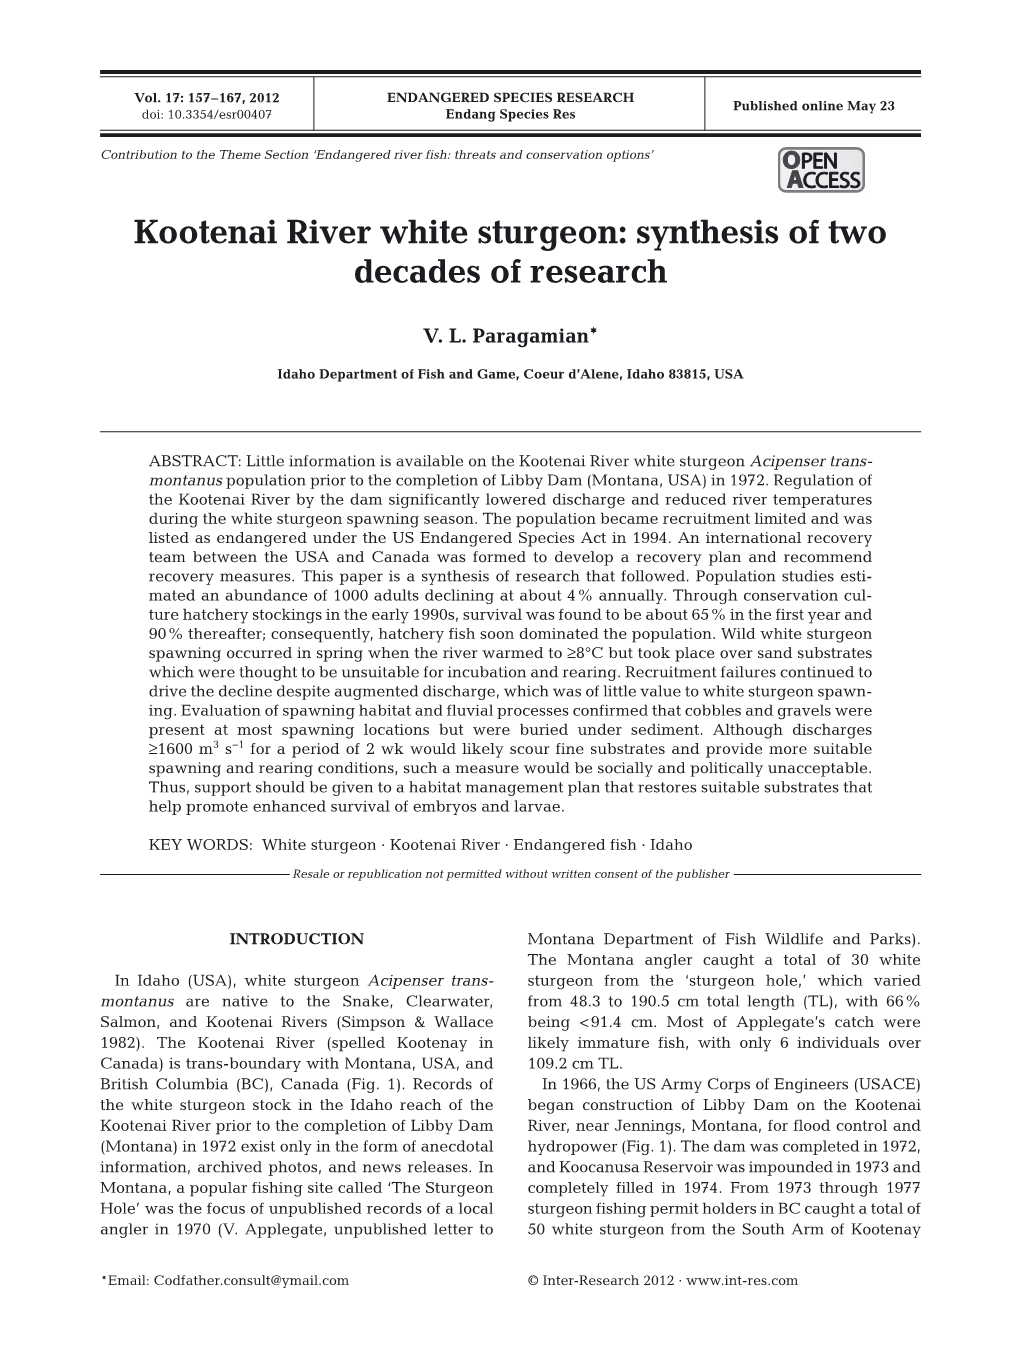 Kootenai River White Sturgeon: Synthesis of Two Decades of Research